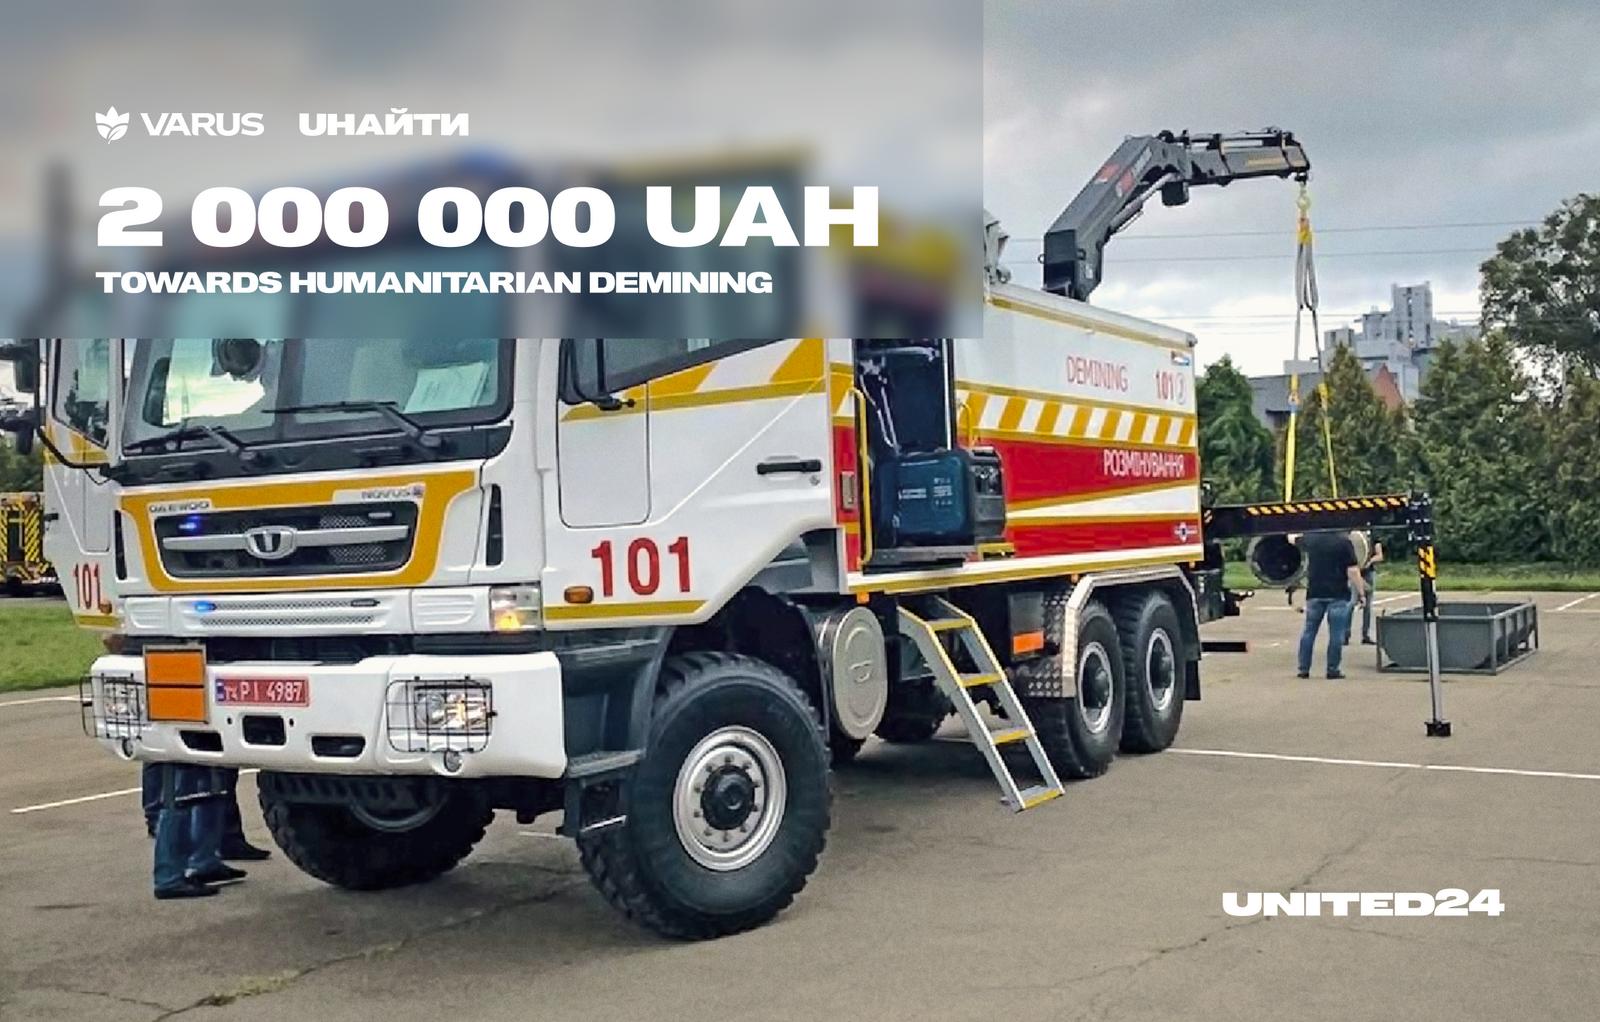 UAH 2,000,000 towards humanitarian demining from VARUS